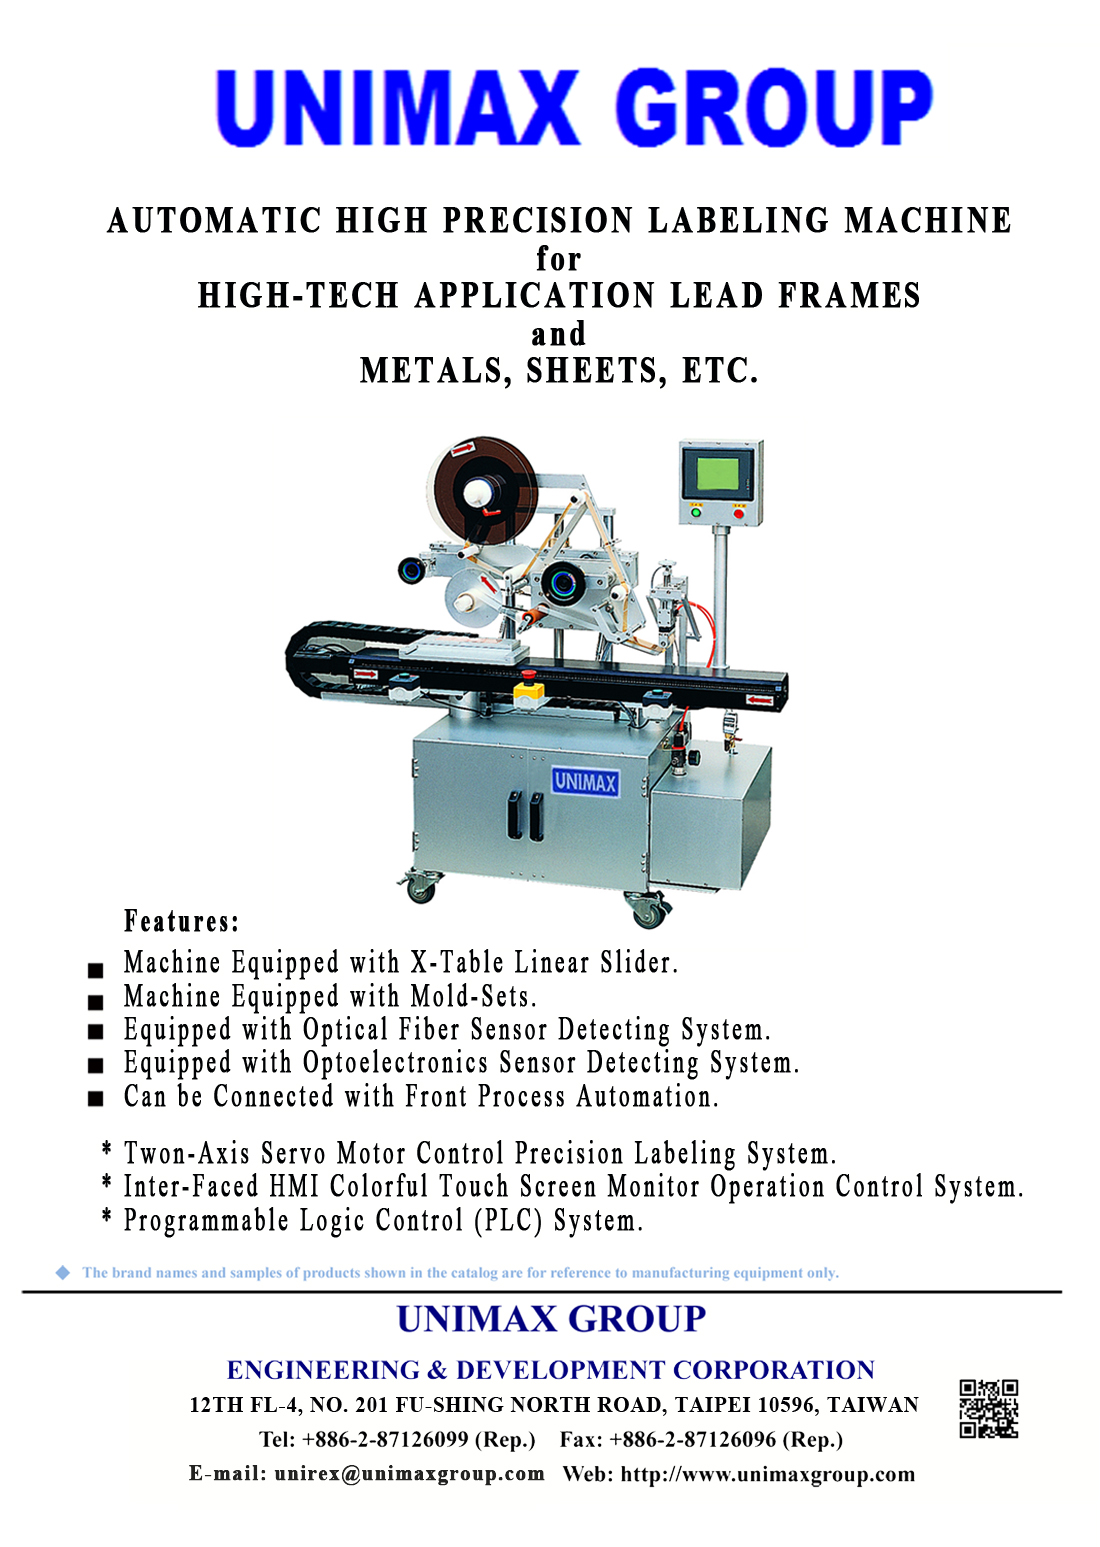 High-Tech Series 310C1 for Lead Frames